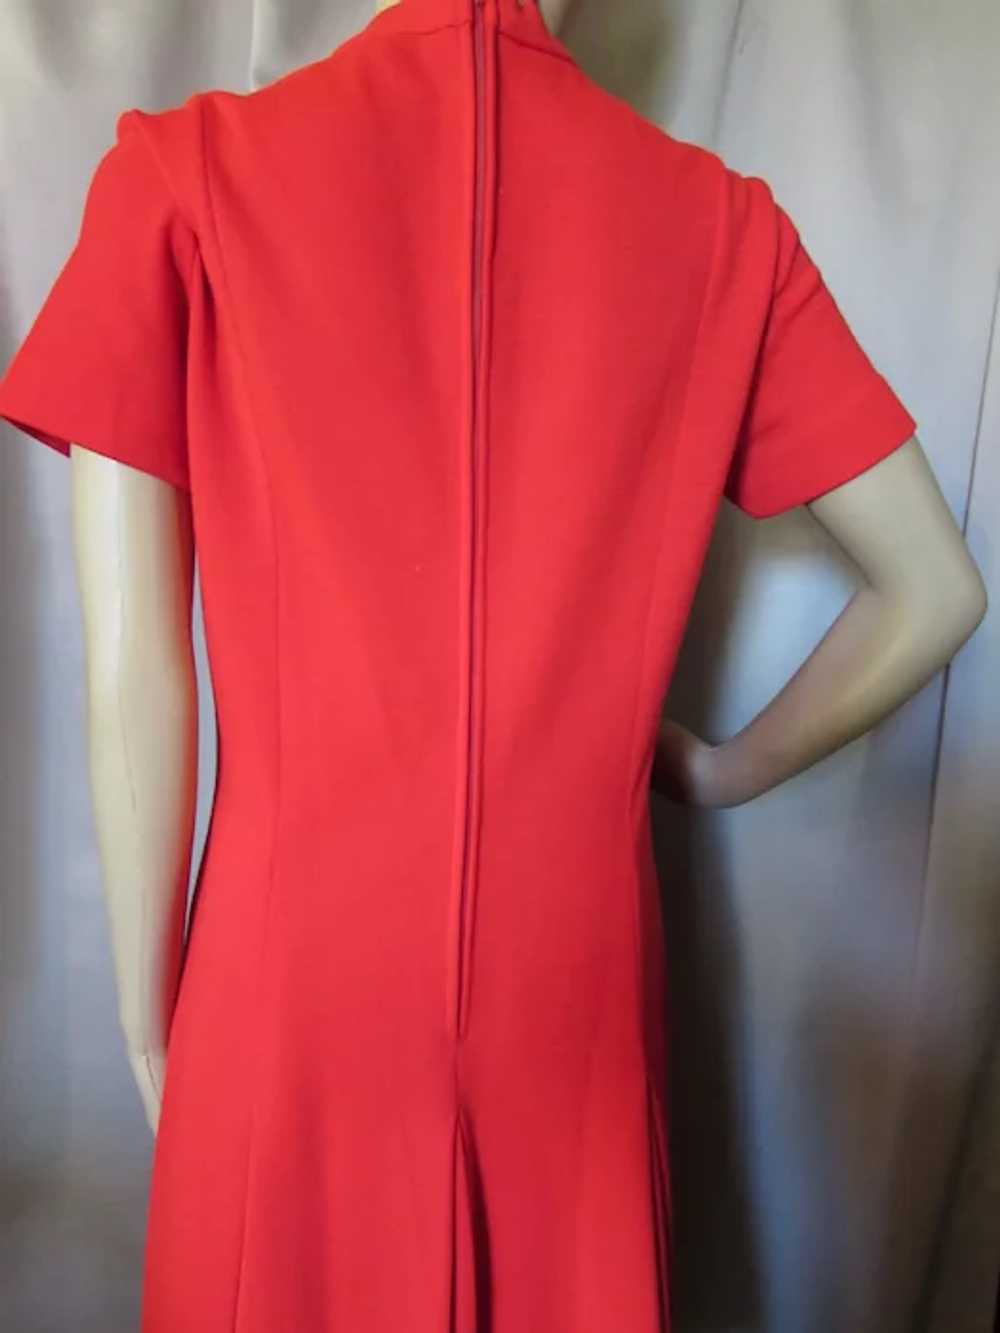 Cherry Red Knit Jacket Dress Set 1970 Era - image 6